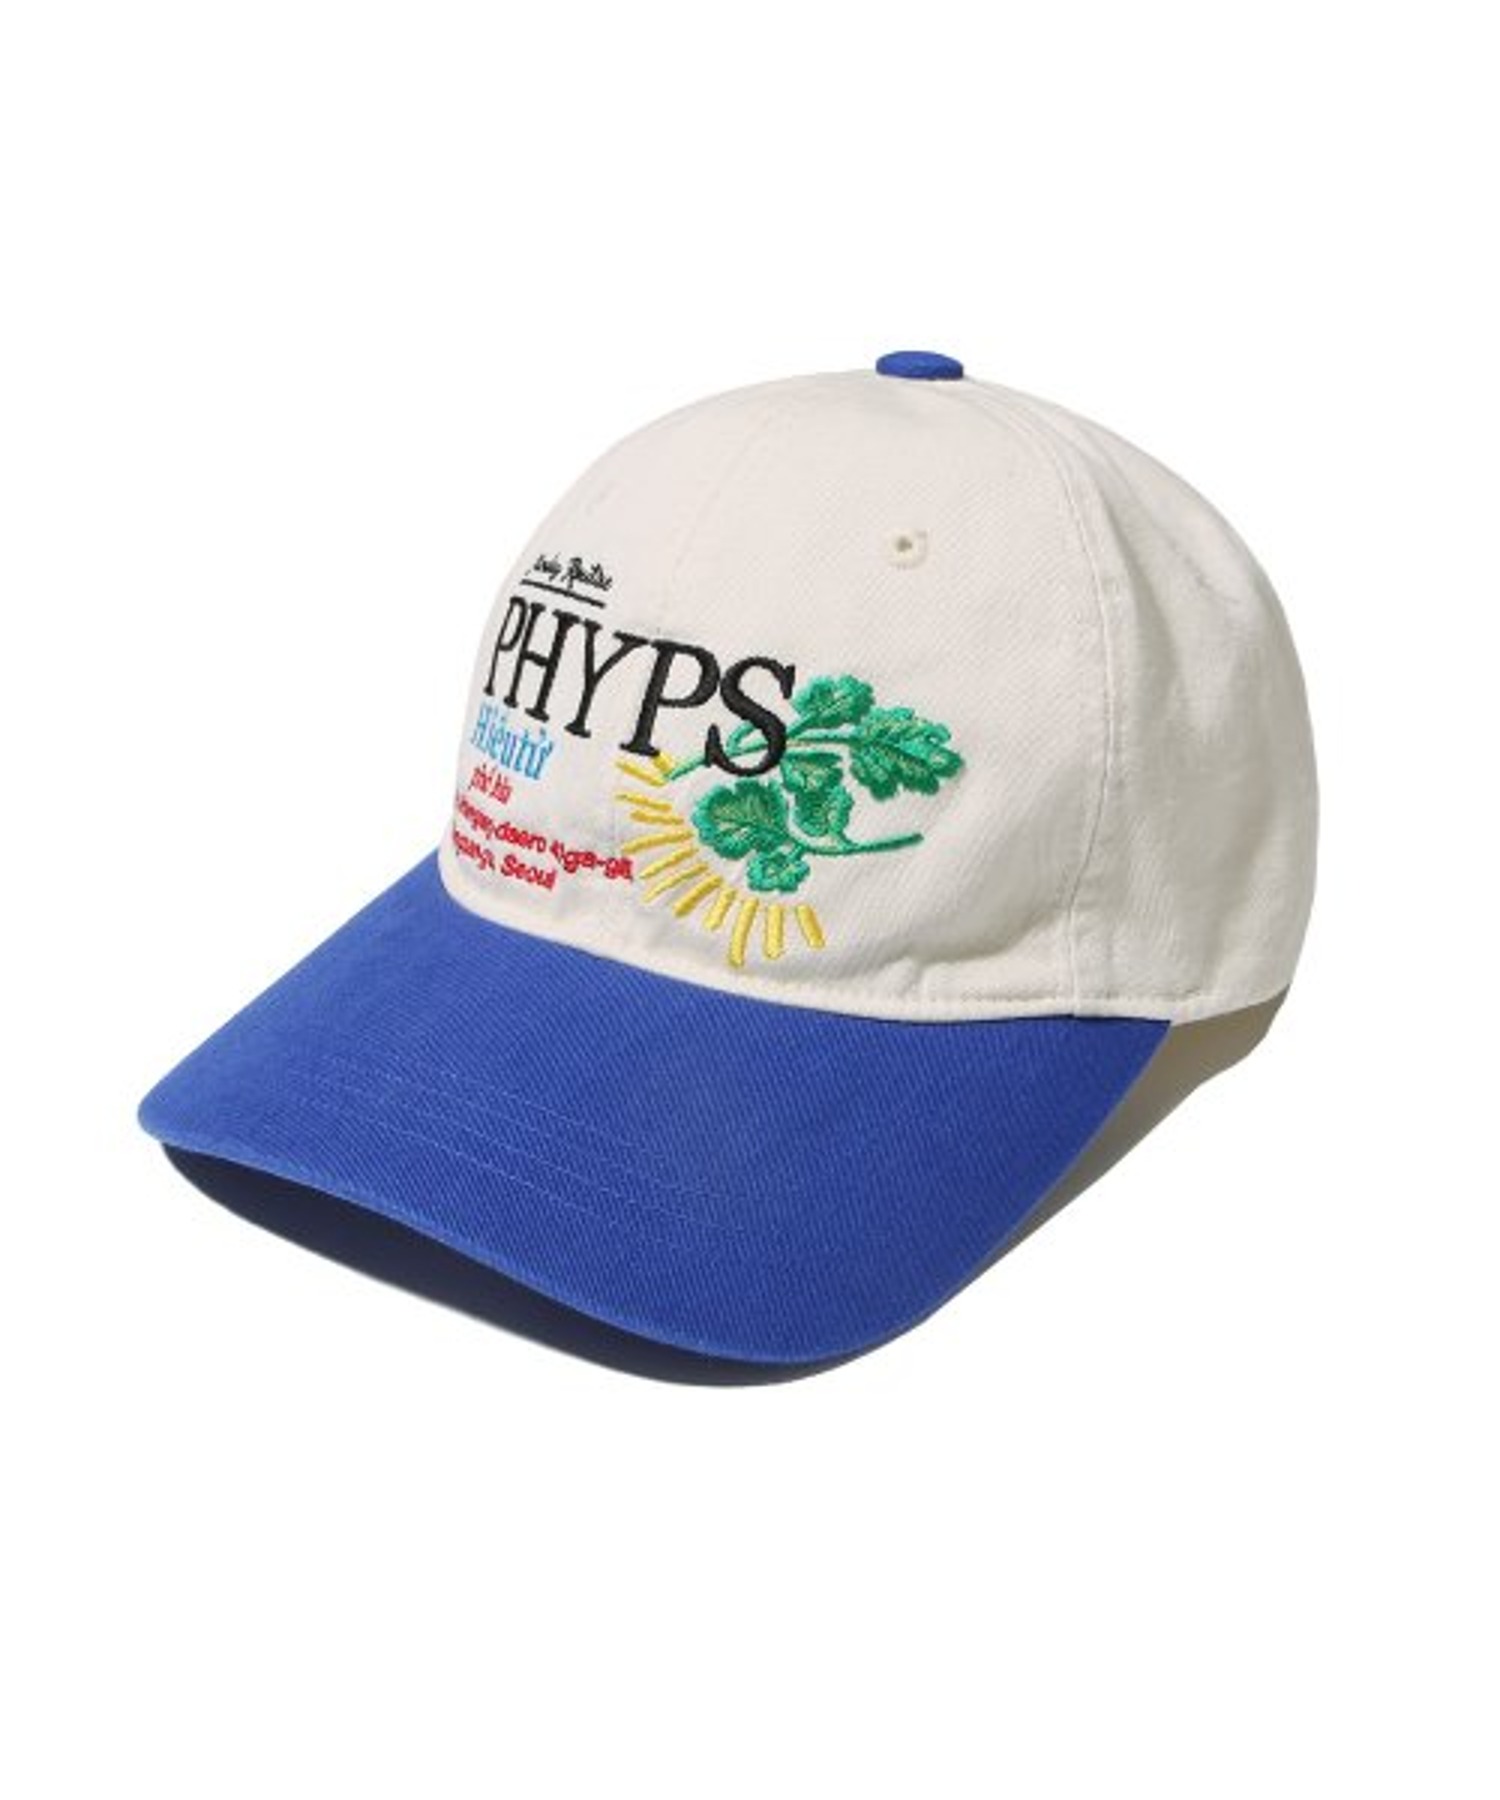 PHYPS® X HIEUTU CILANTRO CAP IVORY